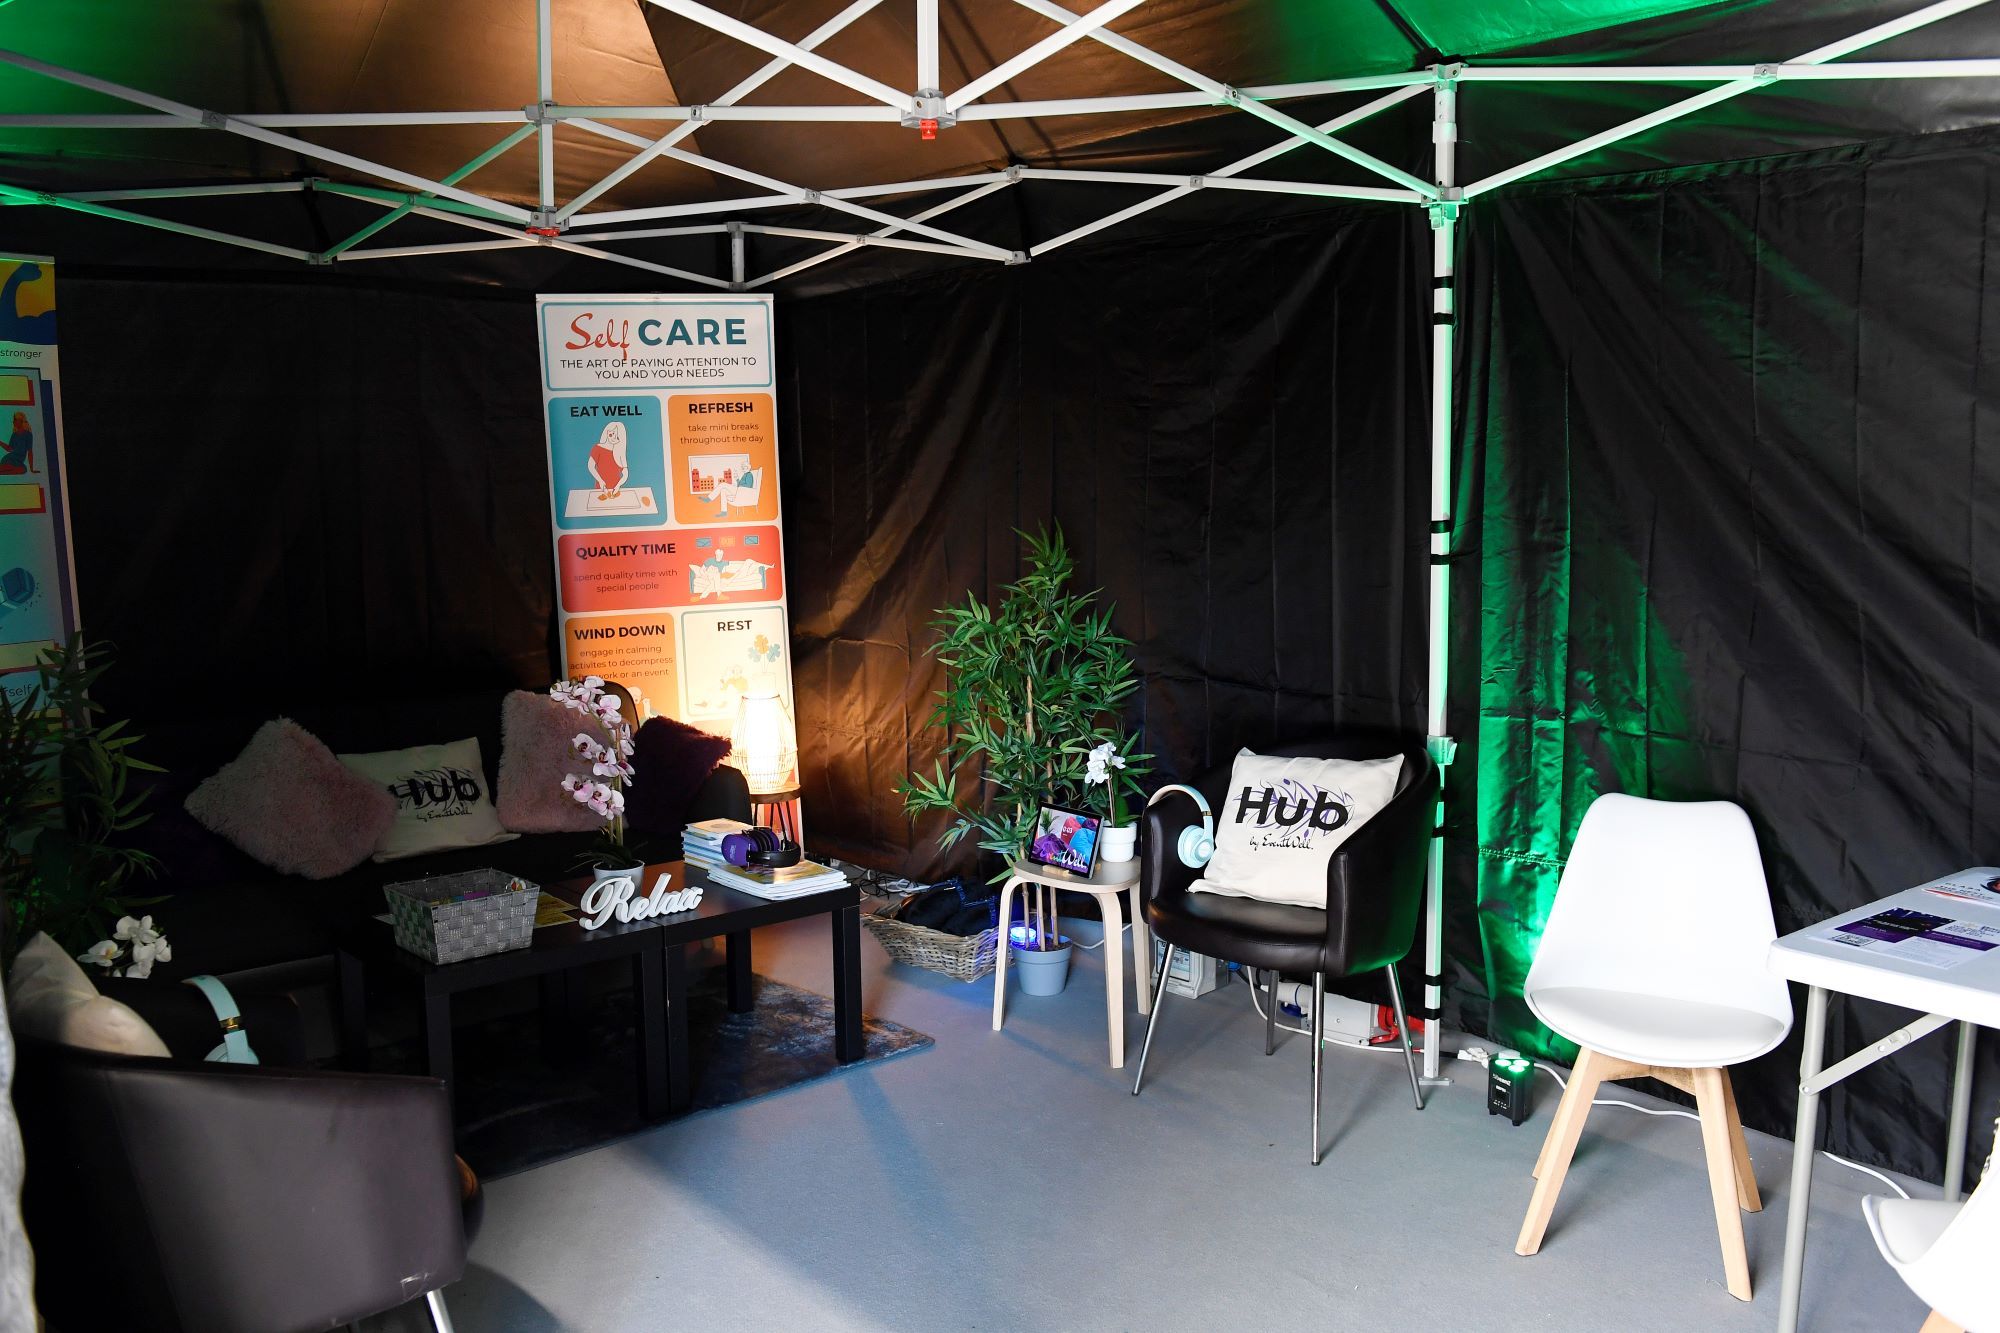 Wellbeing hub tent at plasa show